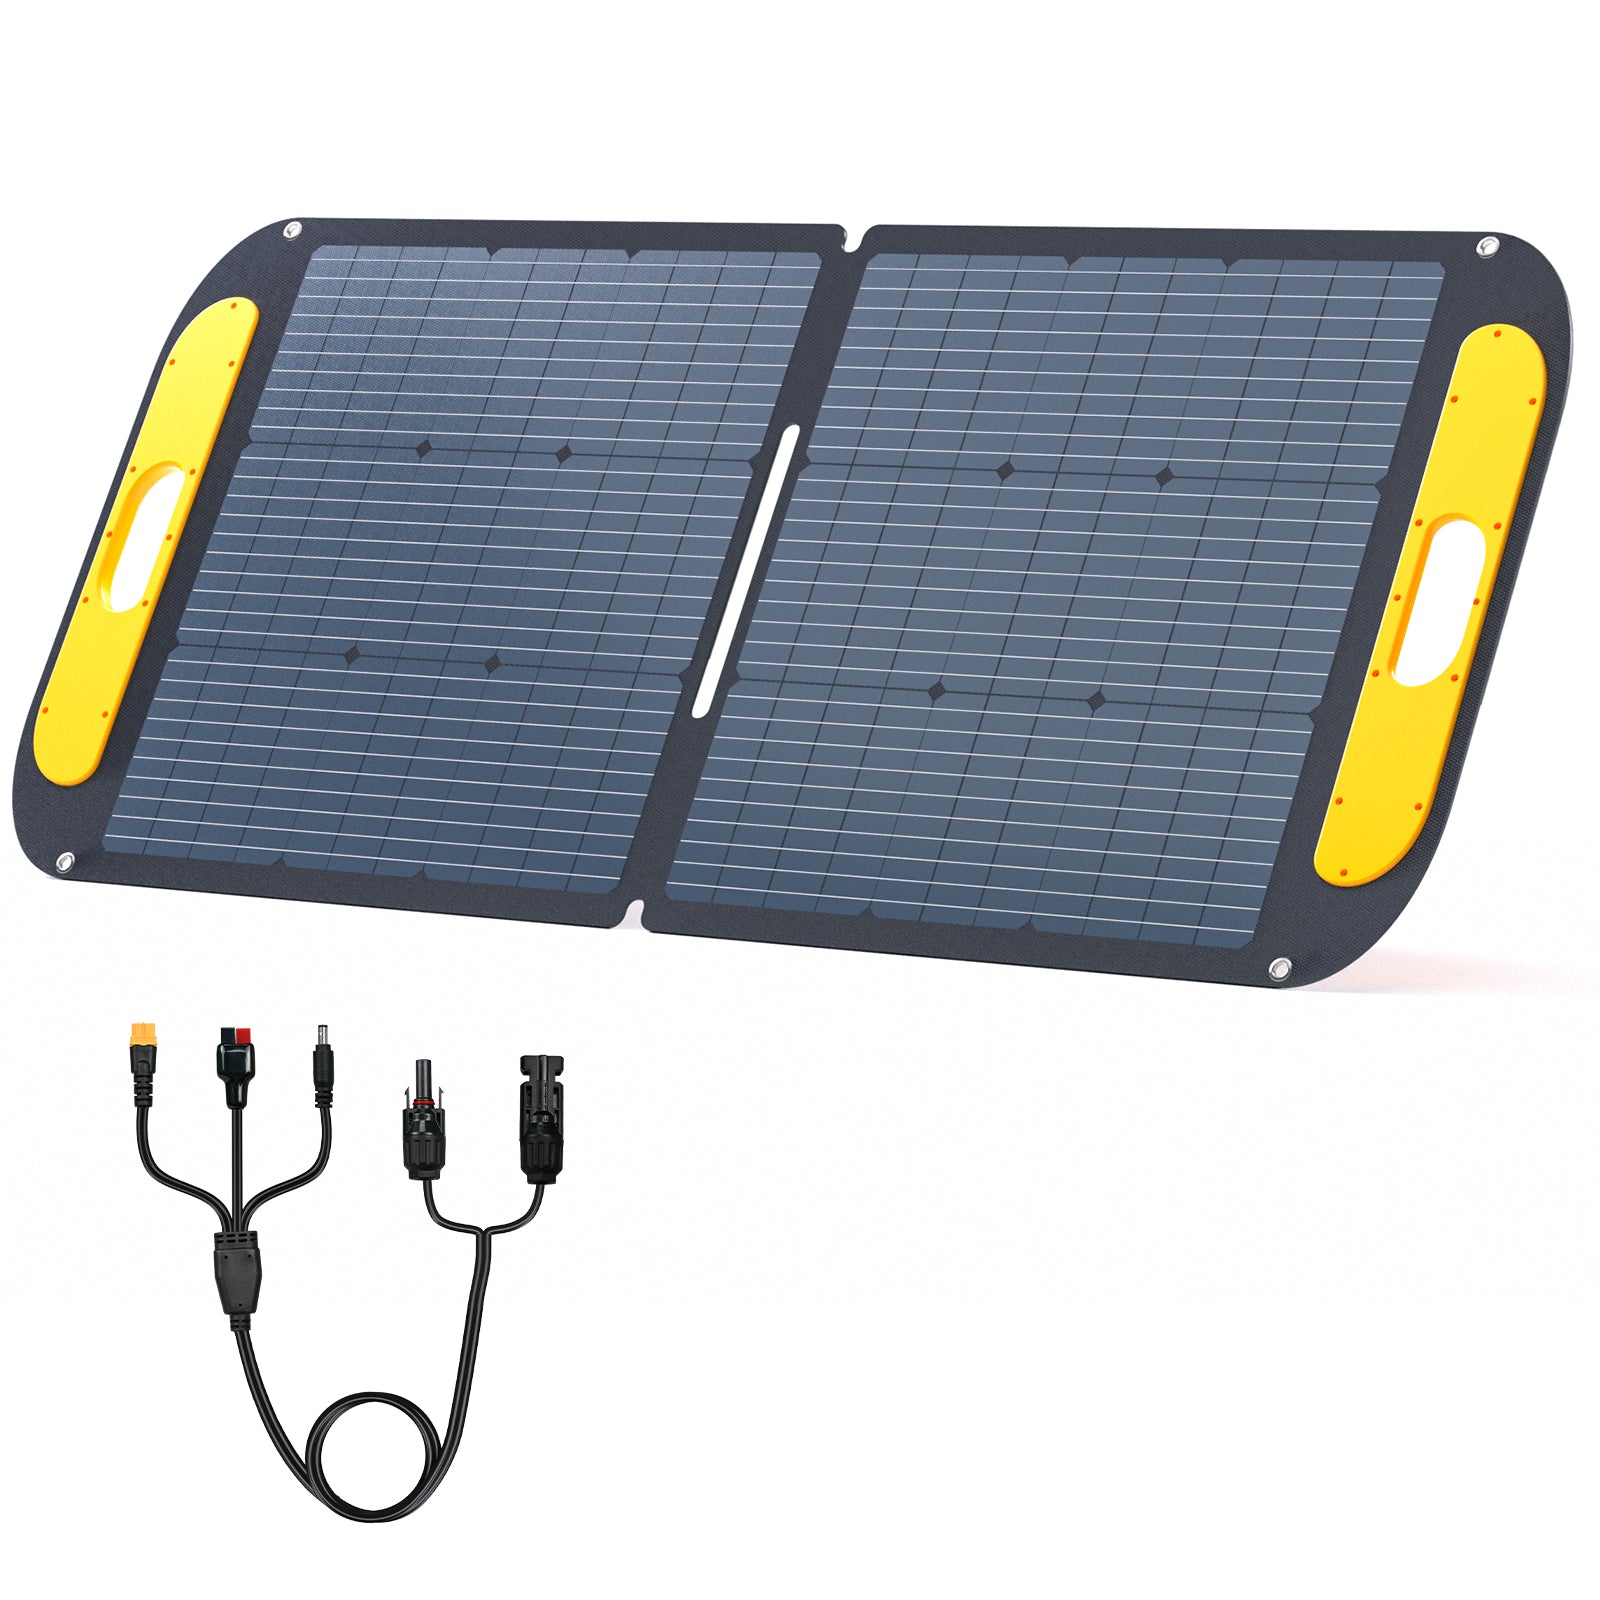 VTOMAN VS110 Portable Solar Panel 110W 19V